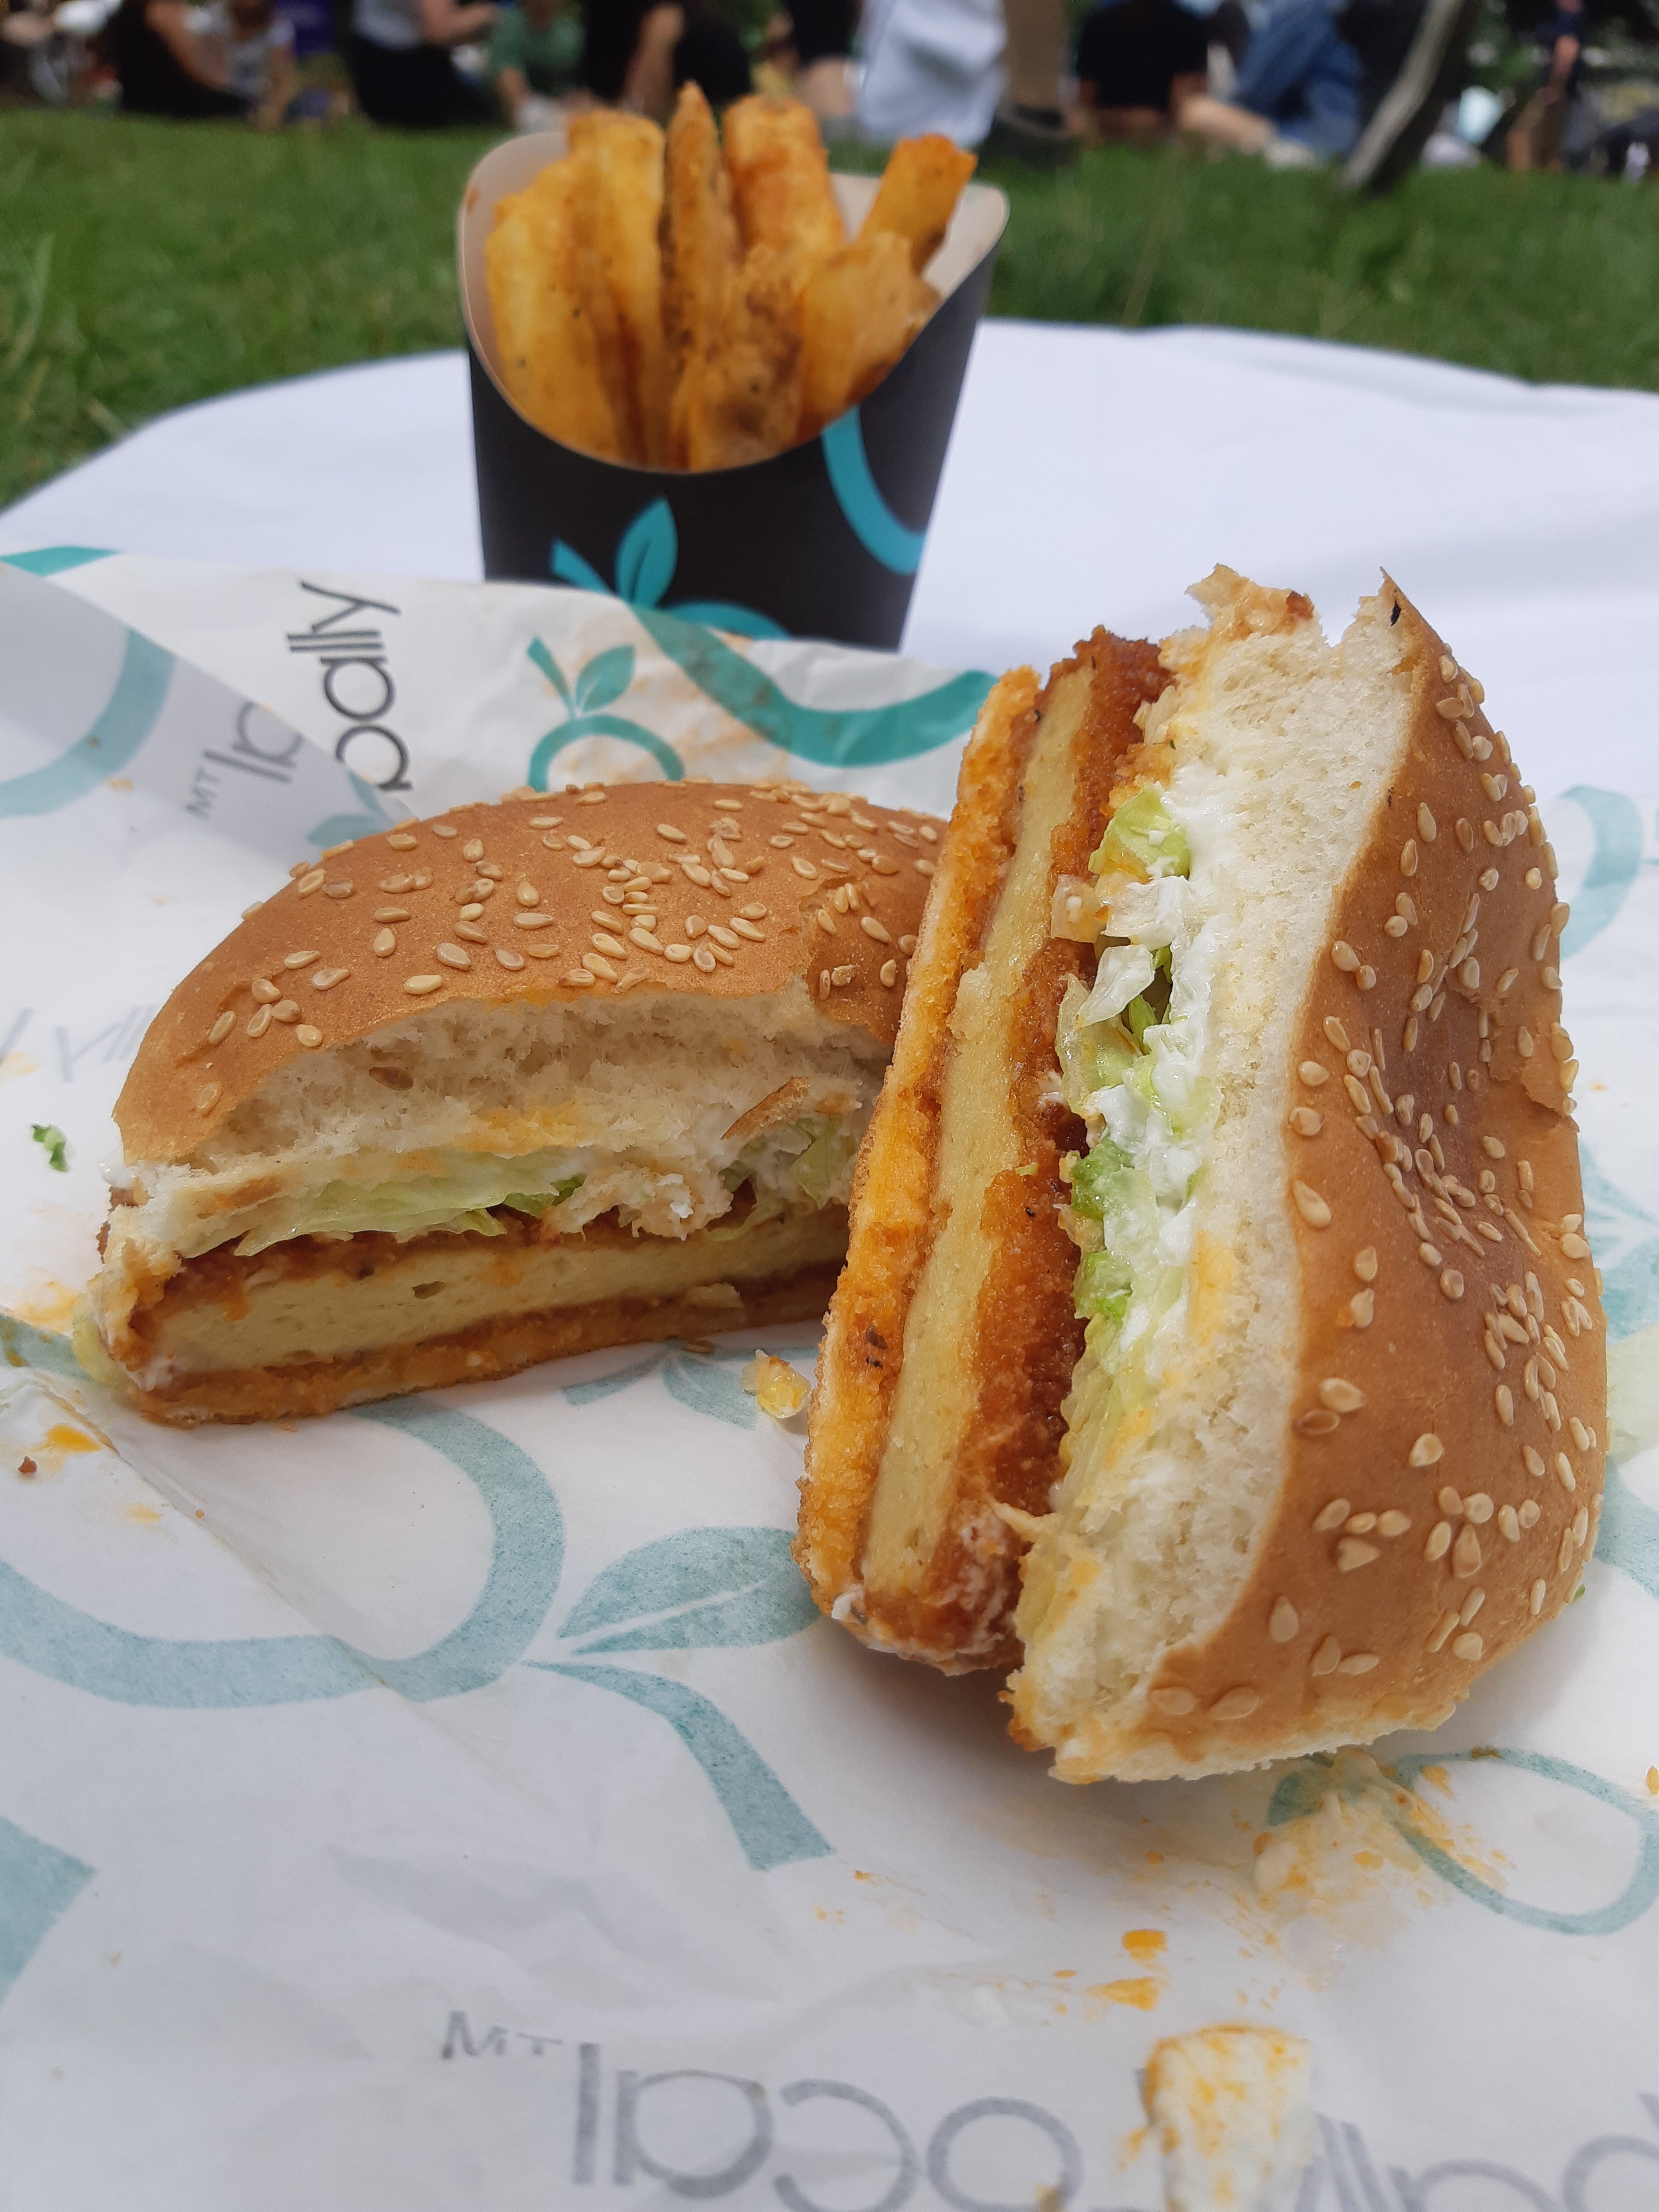 AterImber.com - The Veg Life - Vegandale Festival 2019 Review - Globally Local Buffalo ChickUn Burger and Fries - vegan food, food reviewer, vegan festival